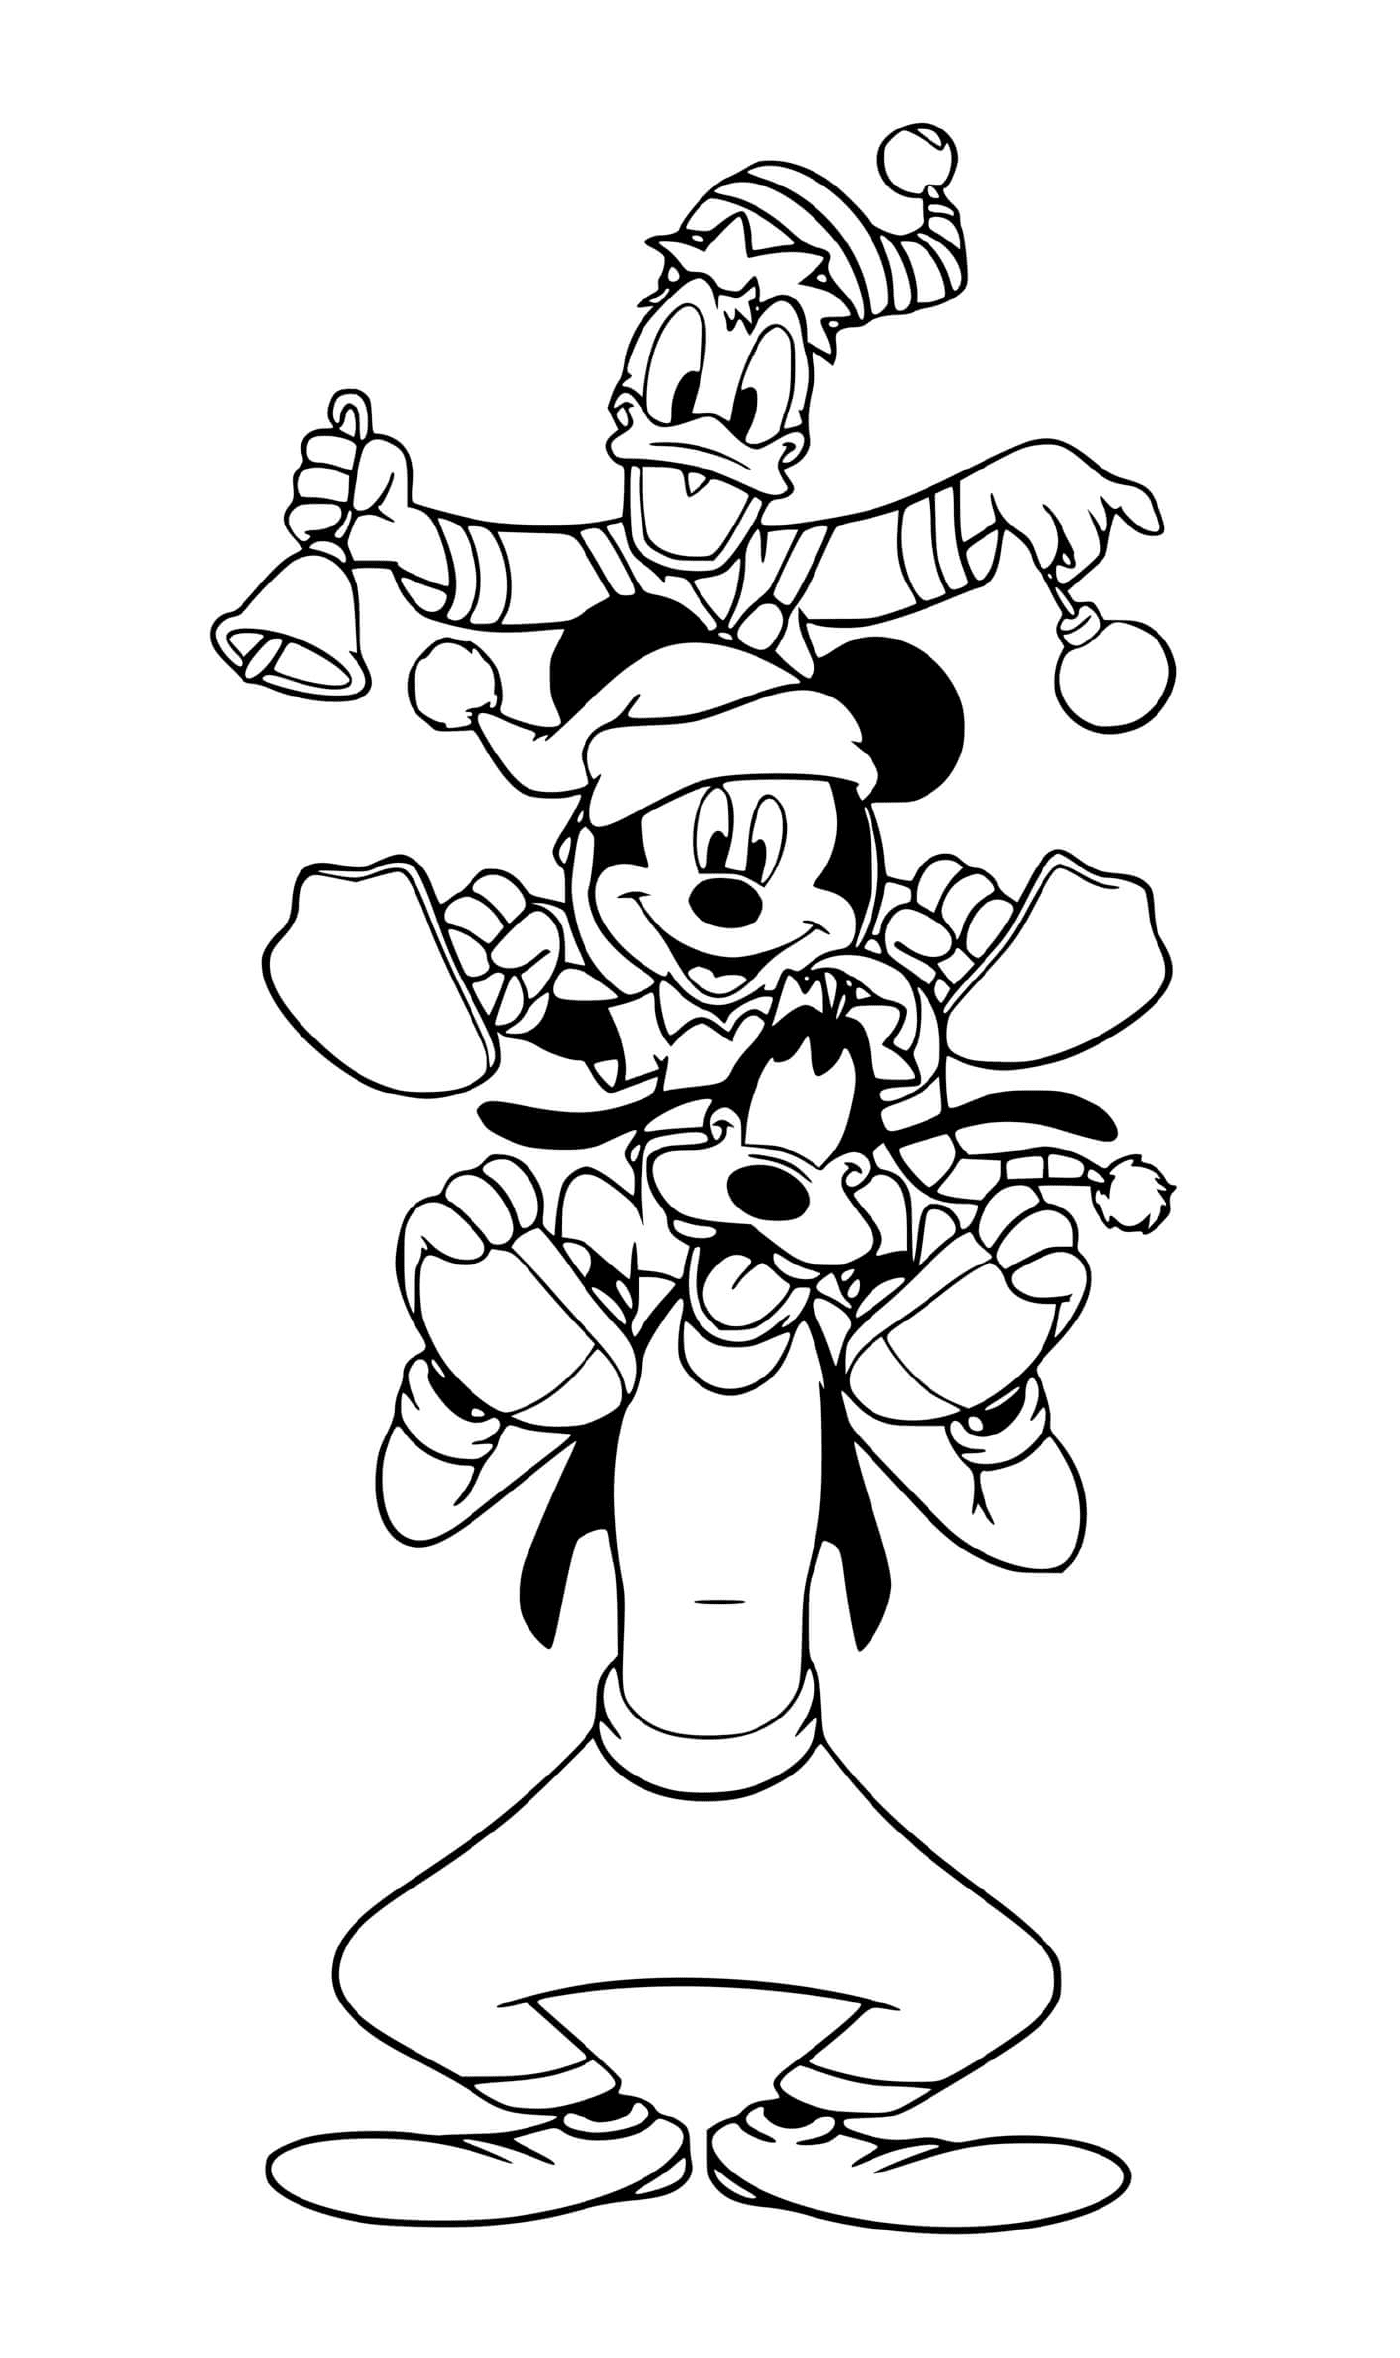  Mickey, Donald and Dingo 圣诞巡演的Mickey, Donald and Dingo 